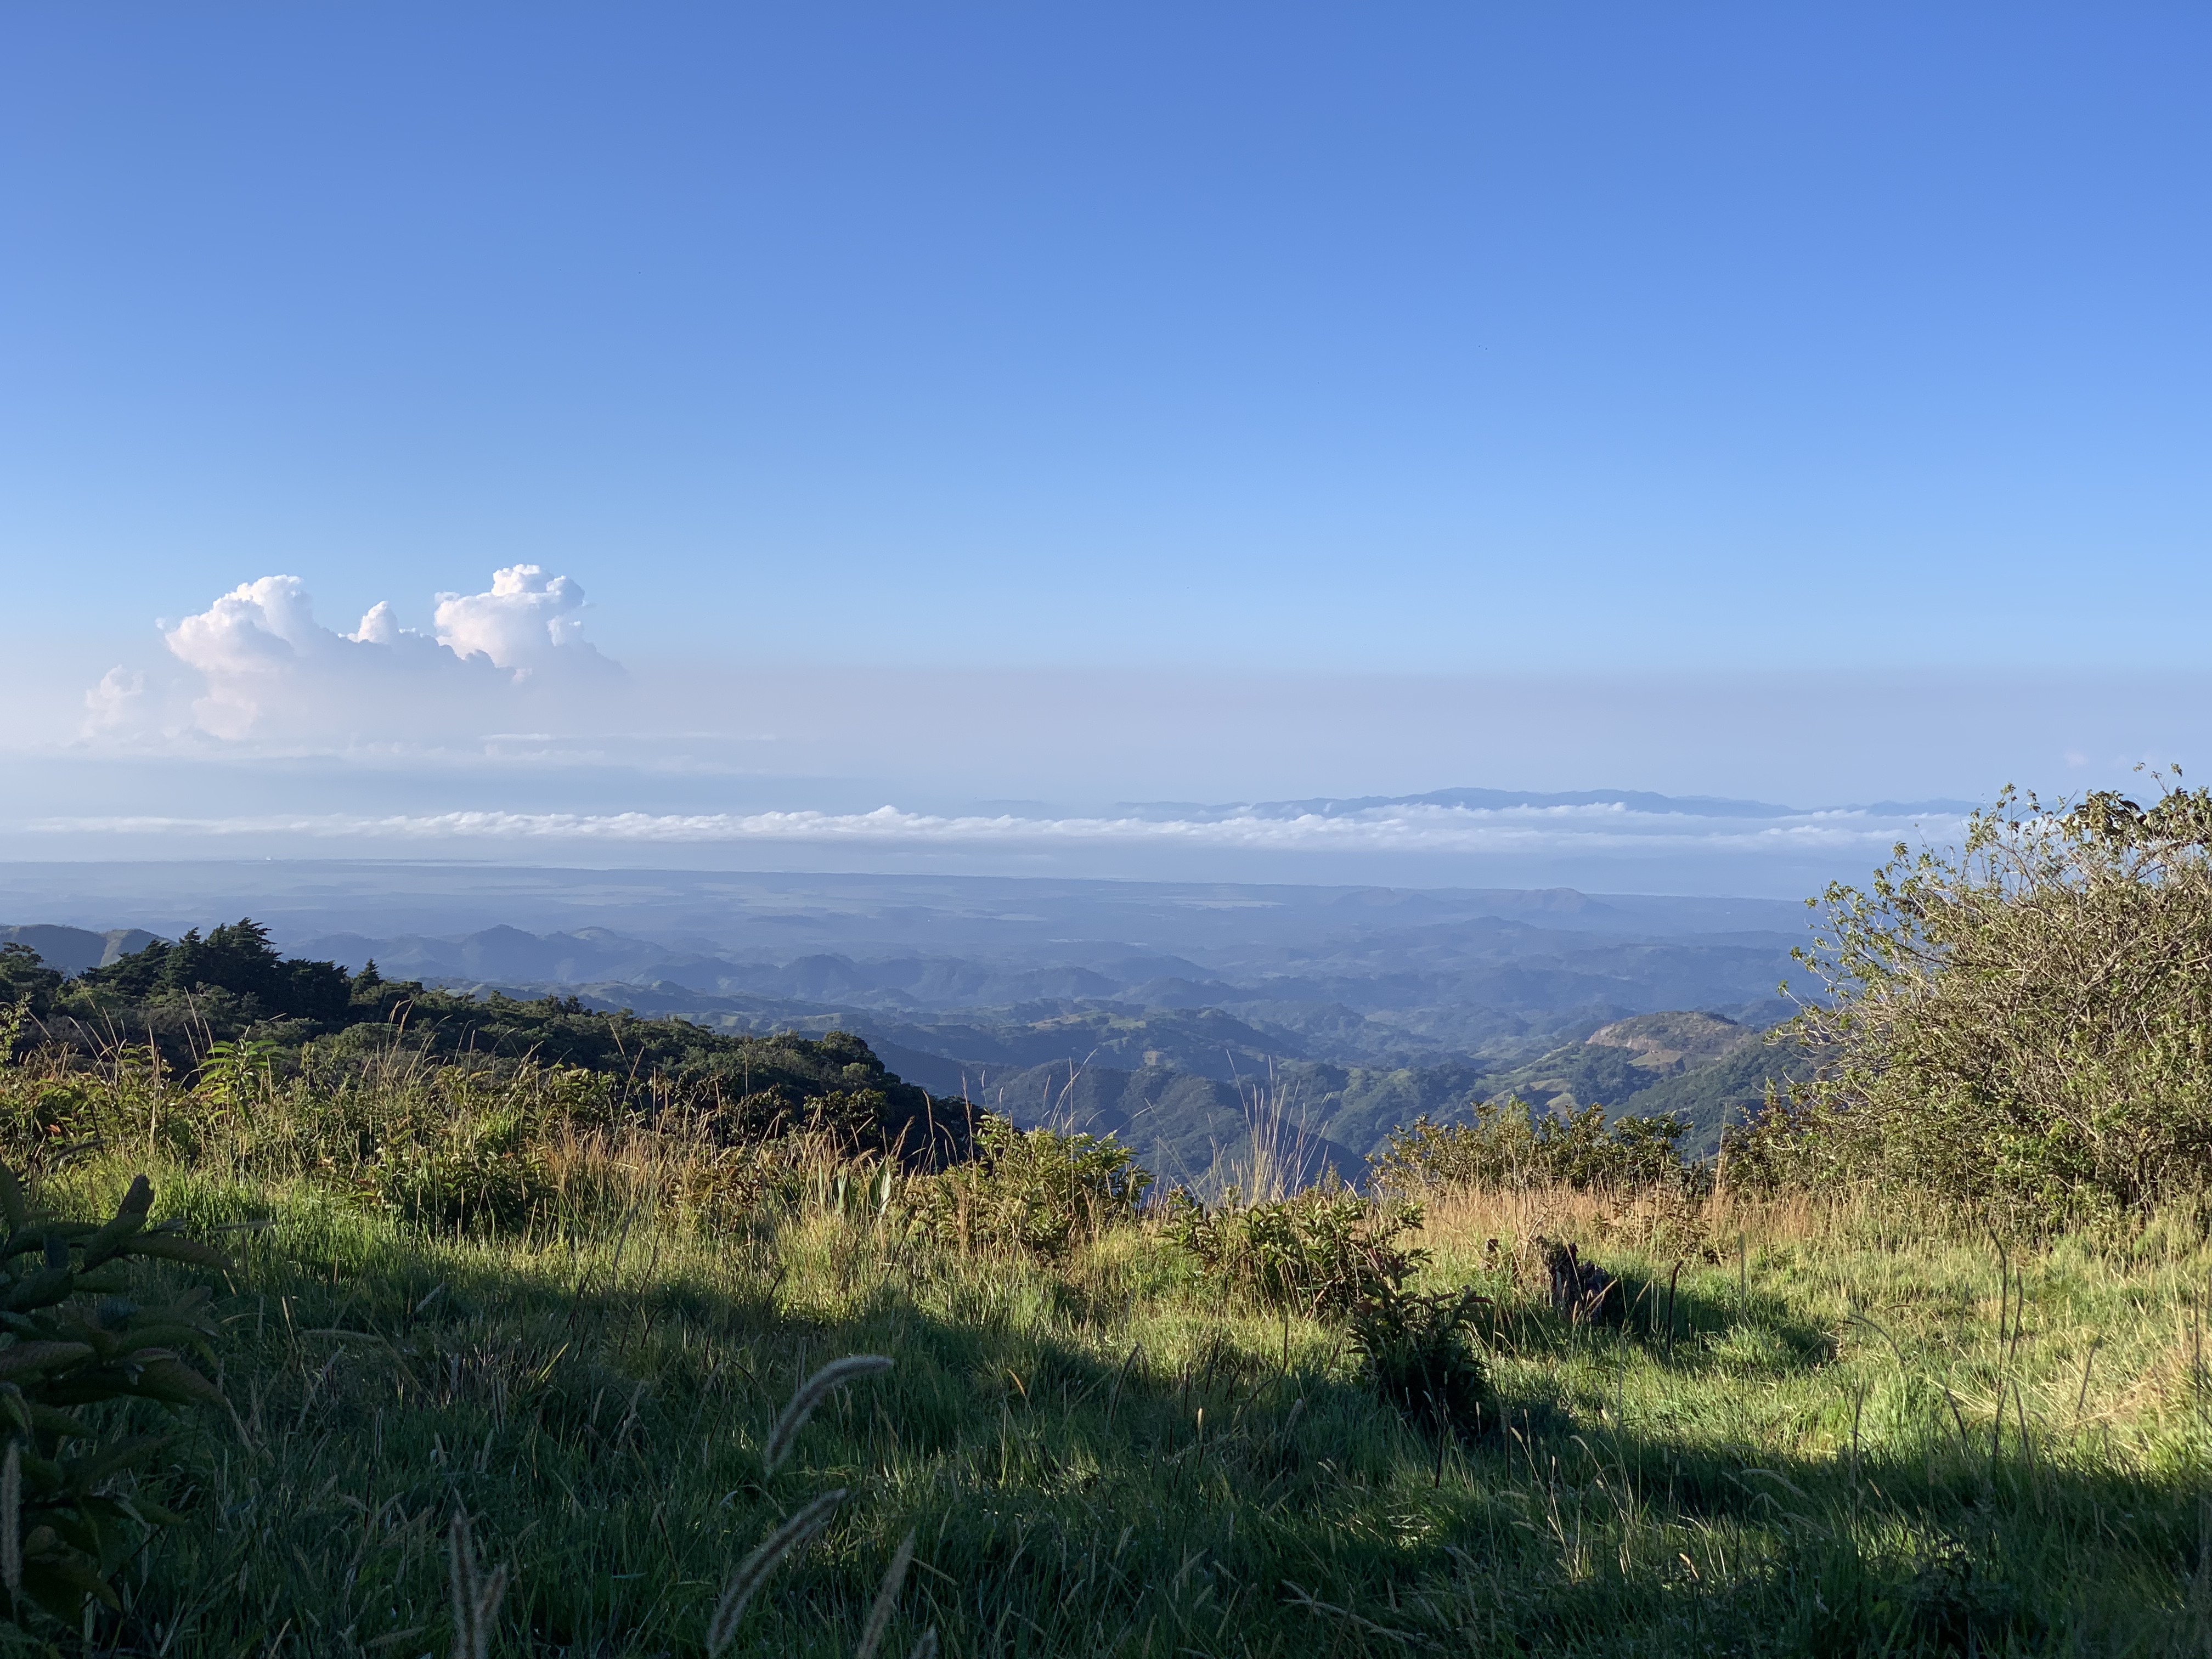 A scenic overlook in Costa Rica